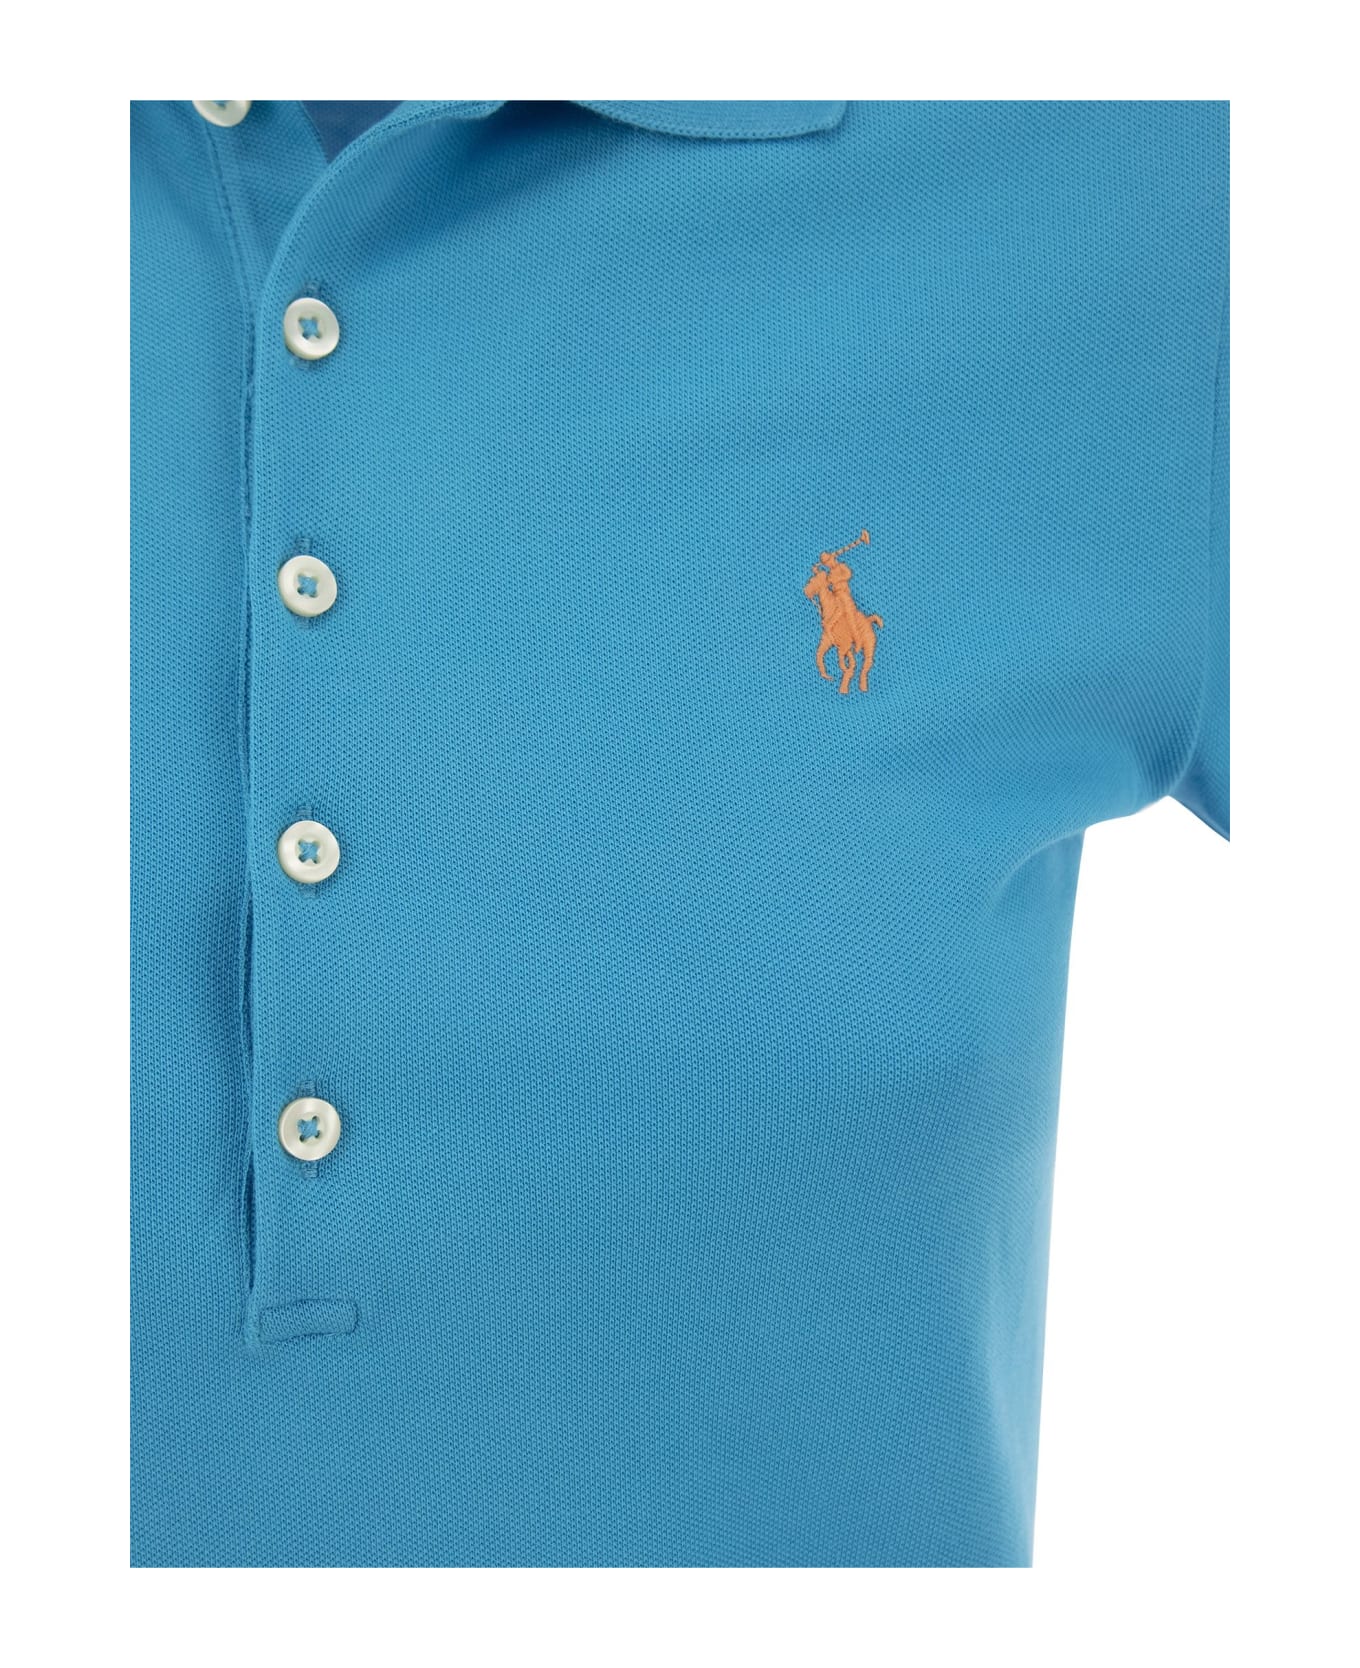 Polo Ralph Lauren Pony Polo Shirt - Light Blue